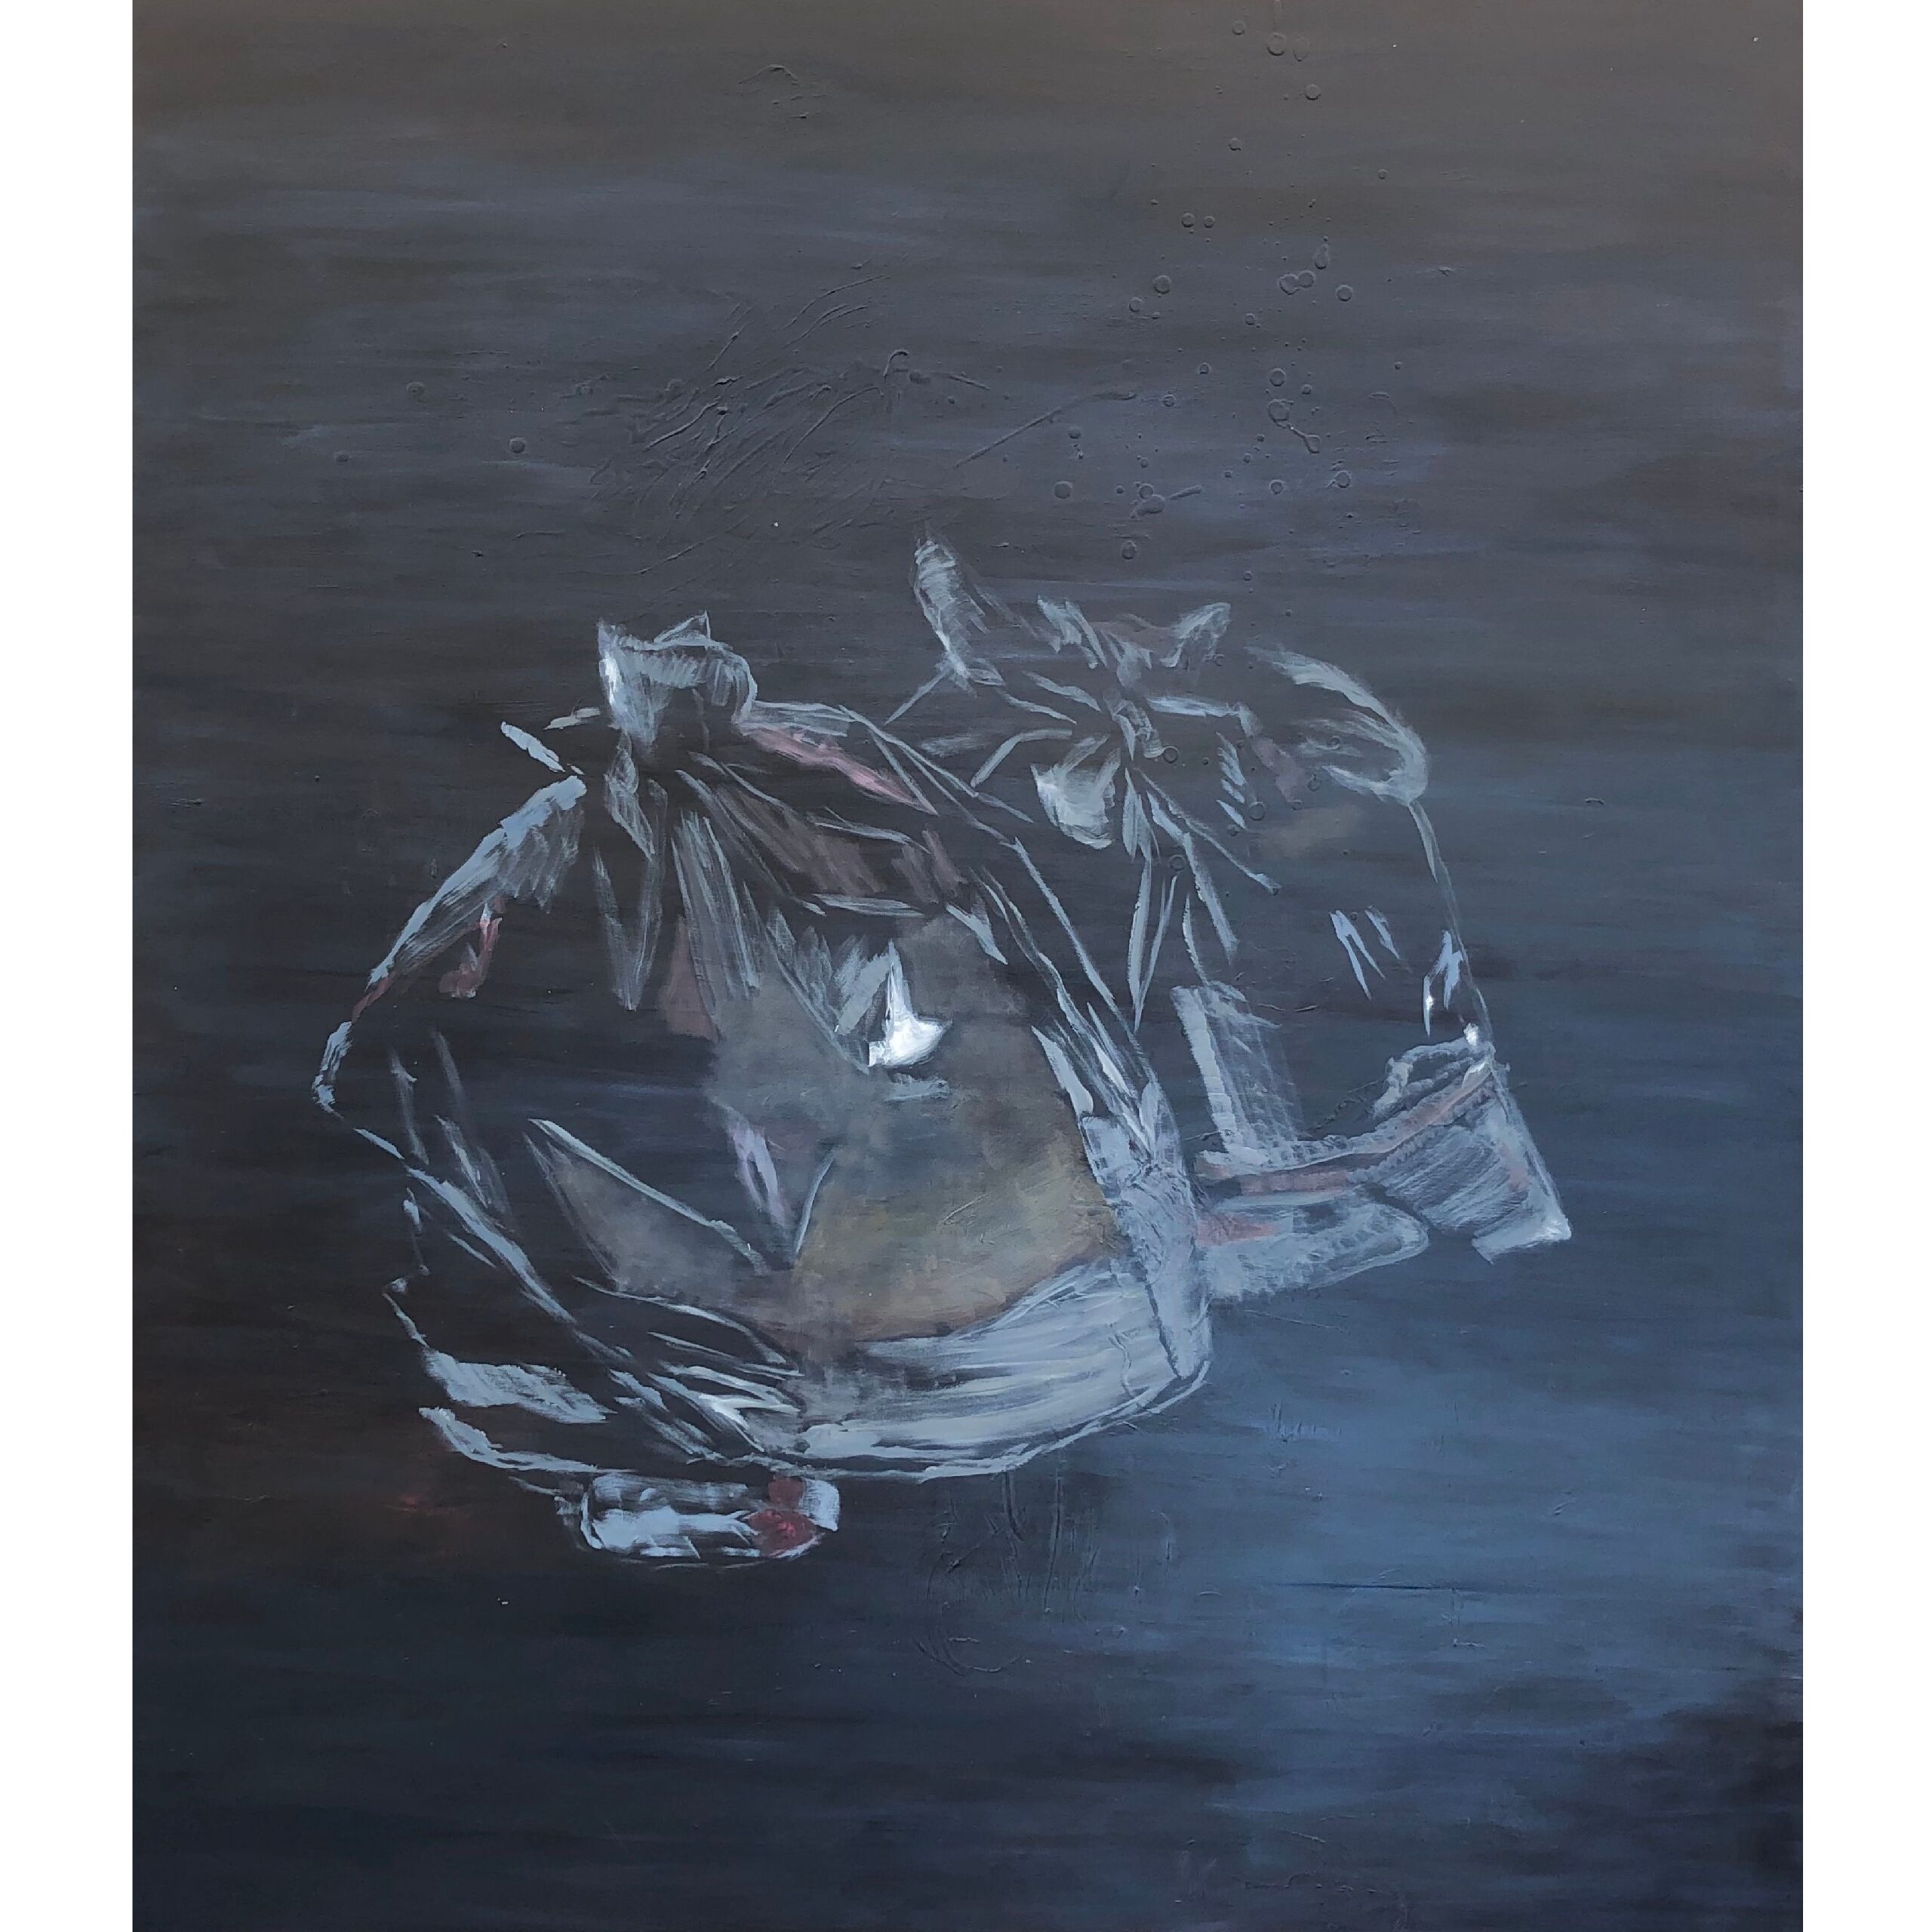 Load I, 160x140, oil/acrylic on canvas, Brit Windahl 2019